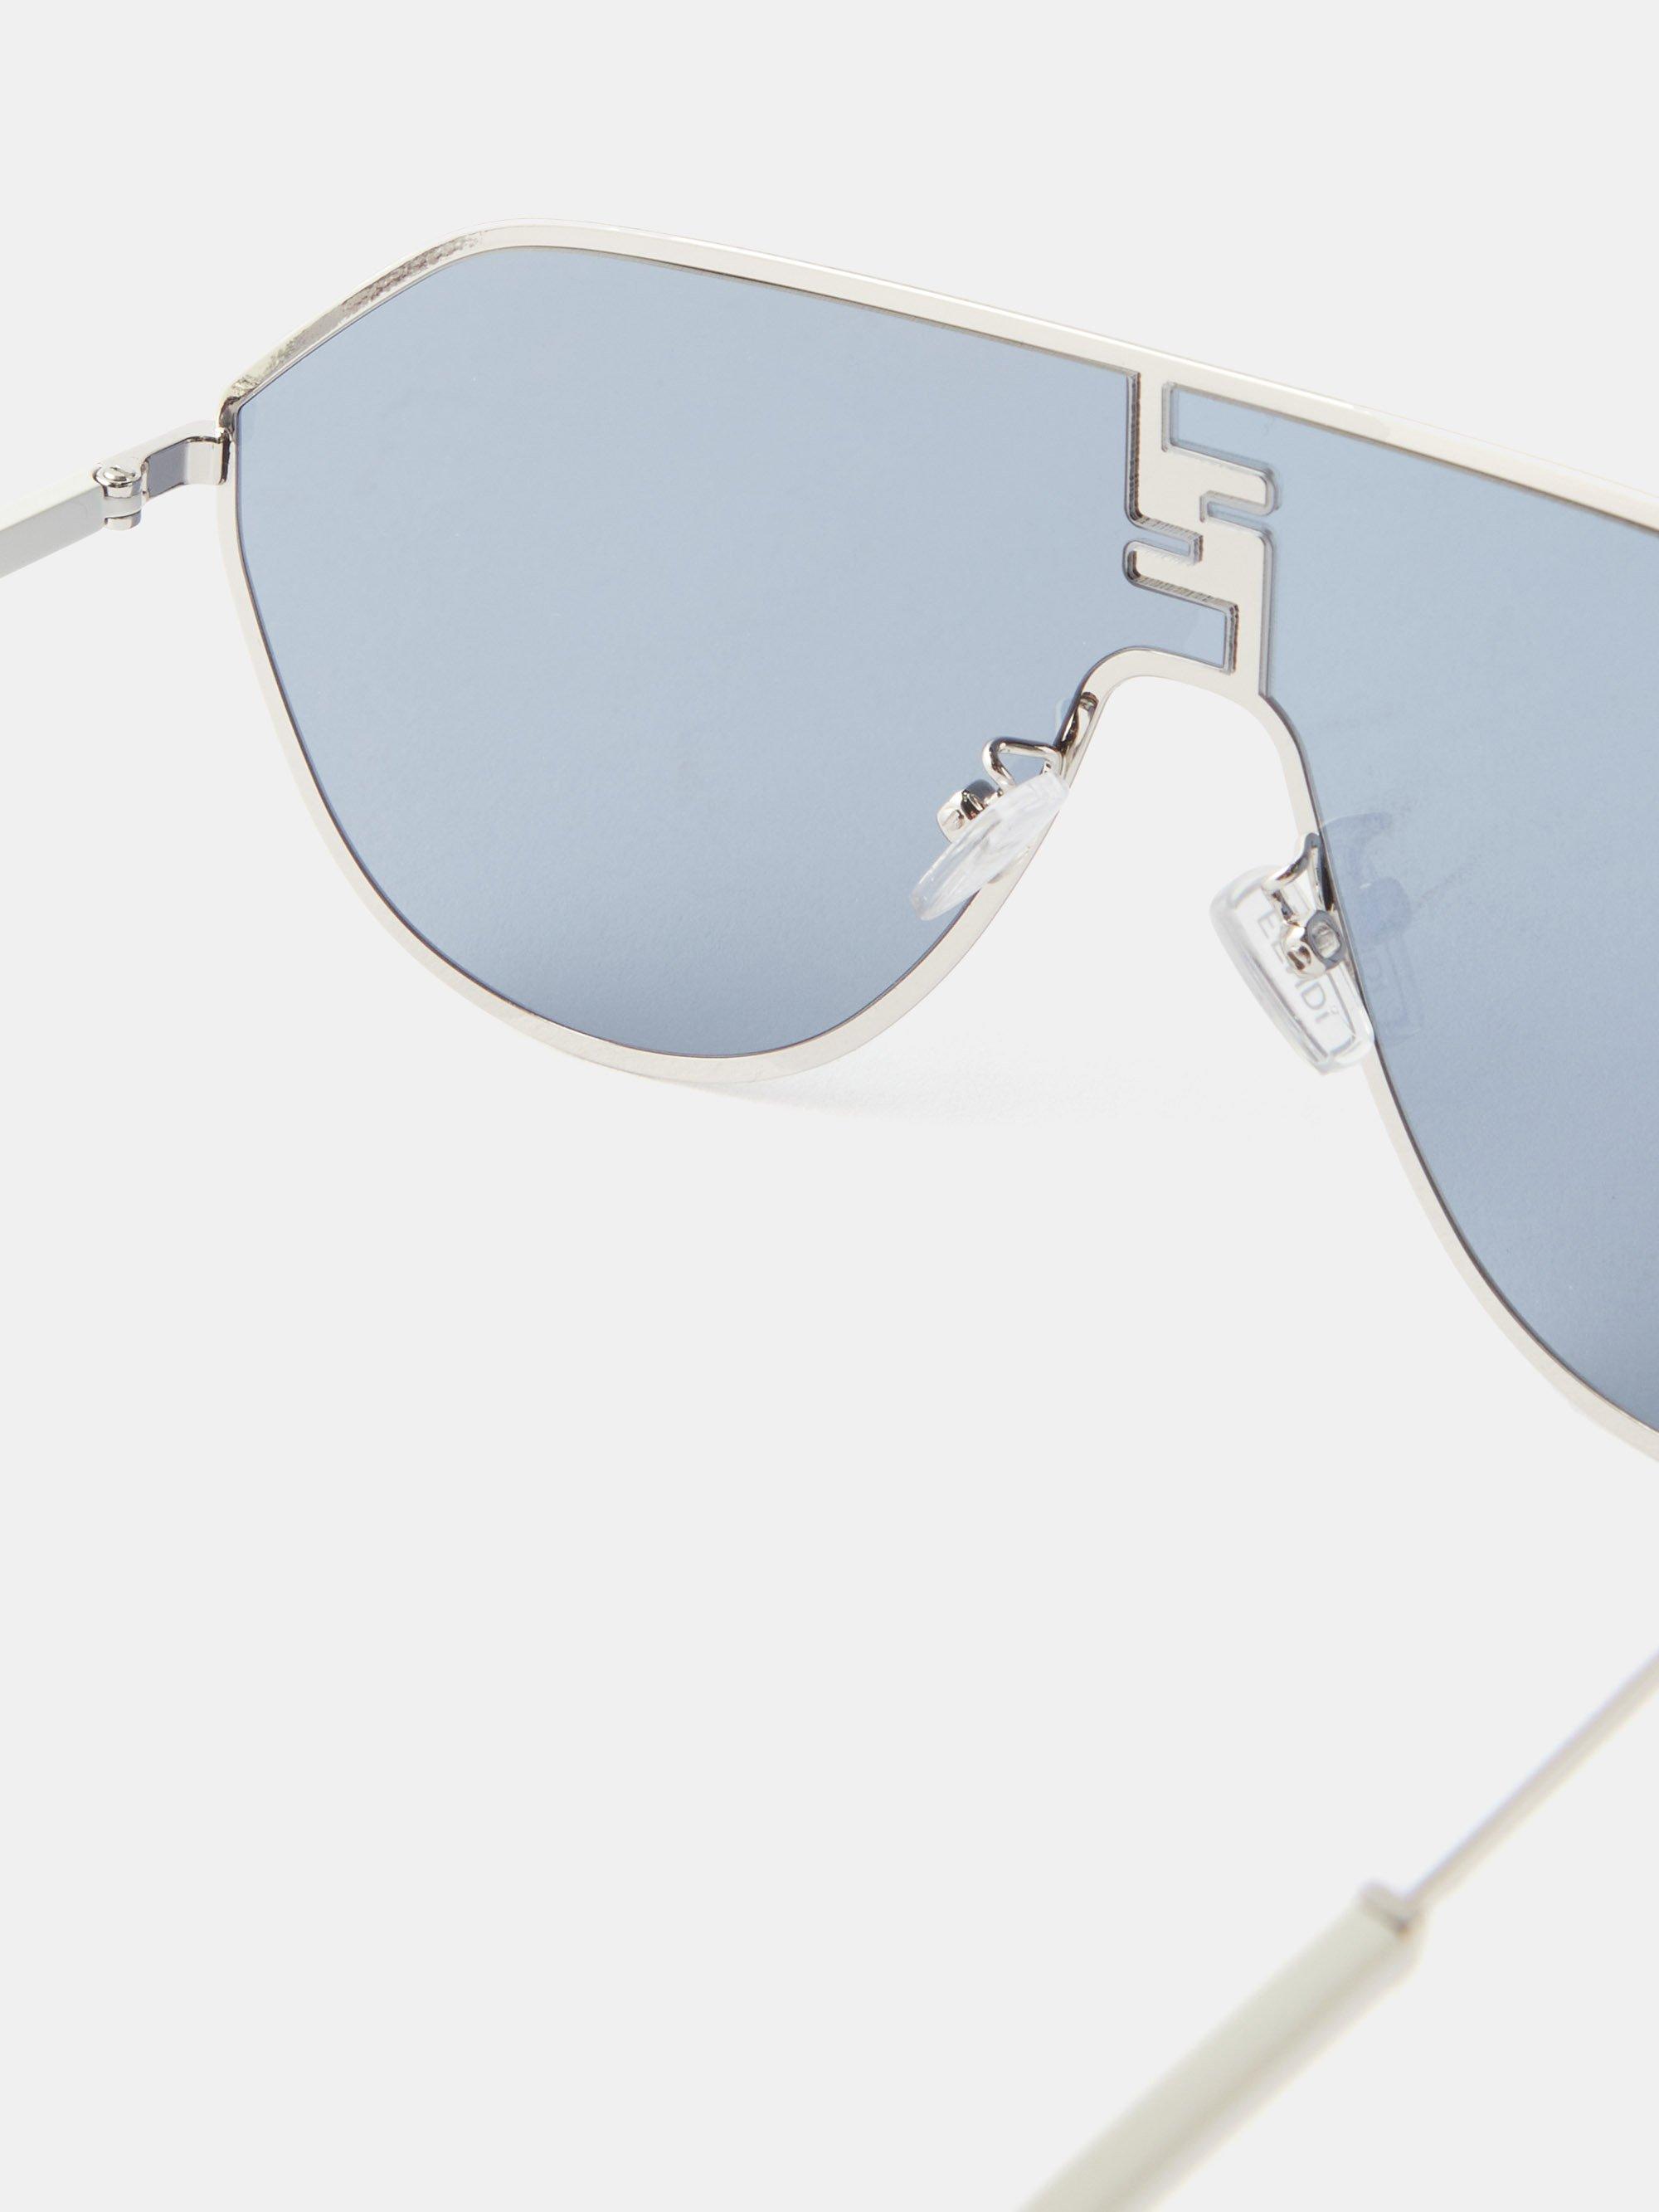 Fendi Aviator Sunglasses in Natural for Men